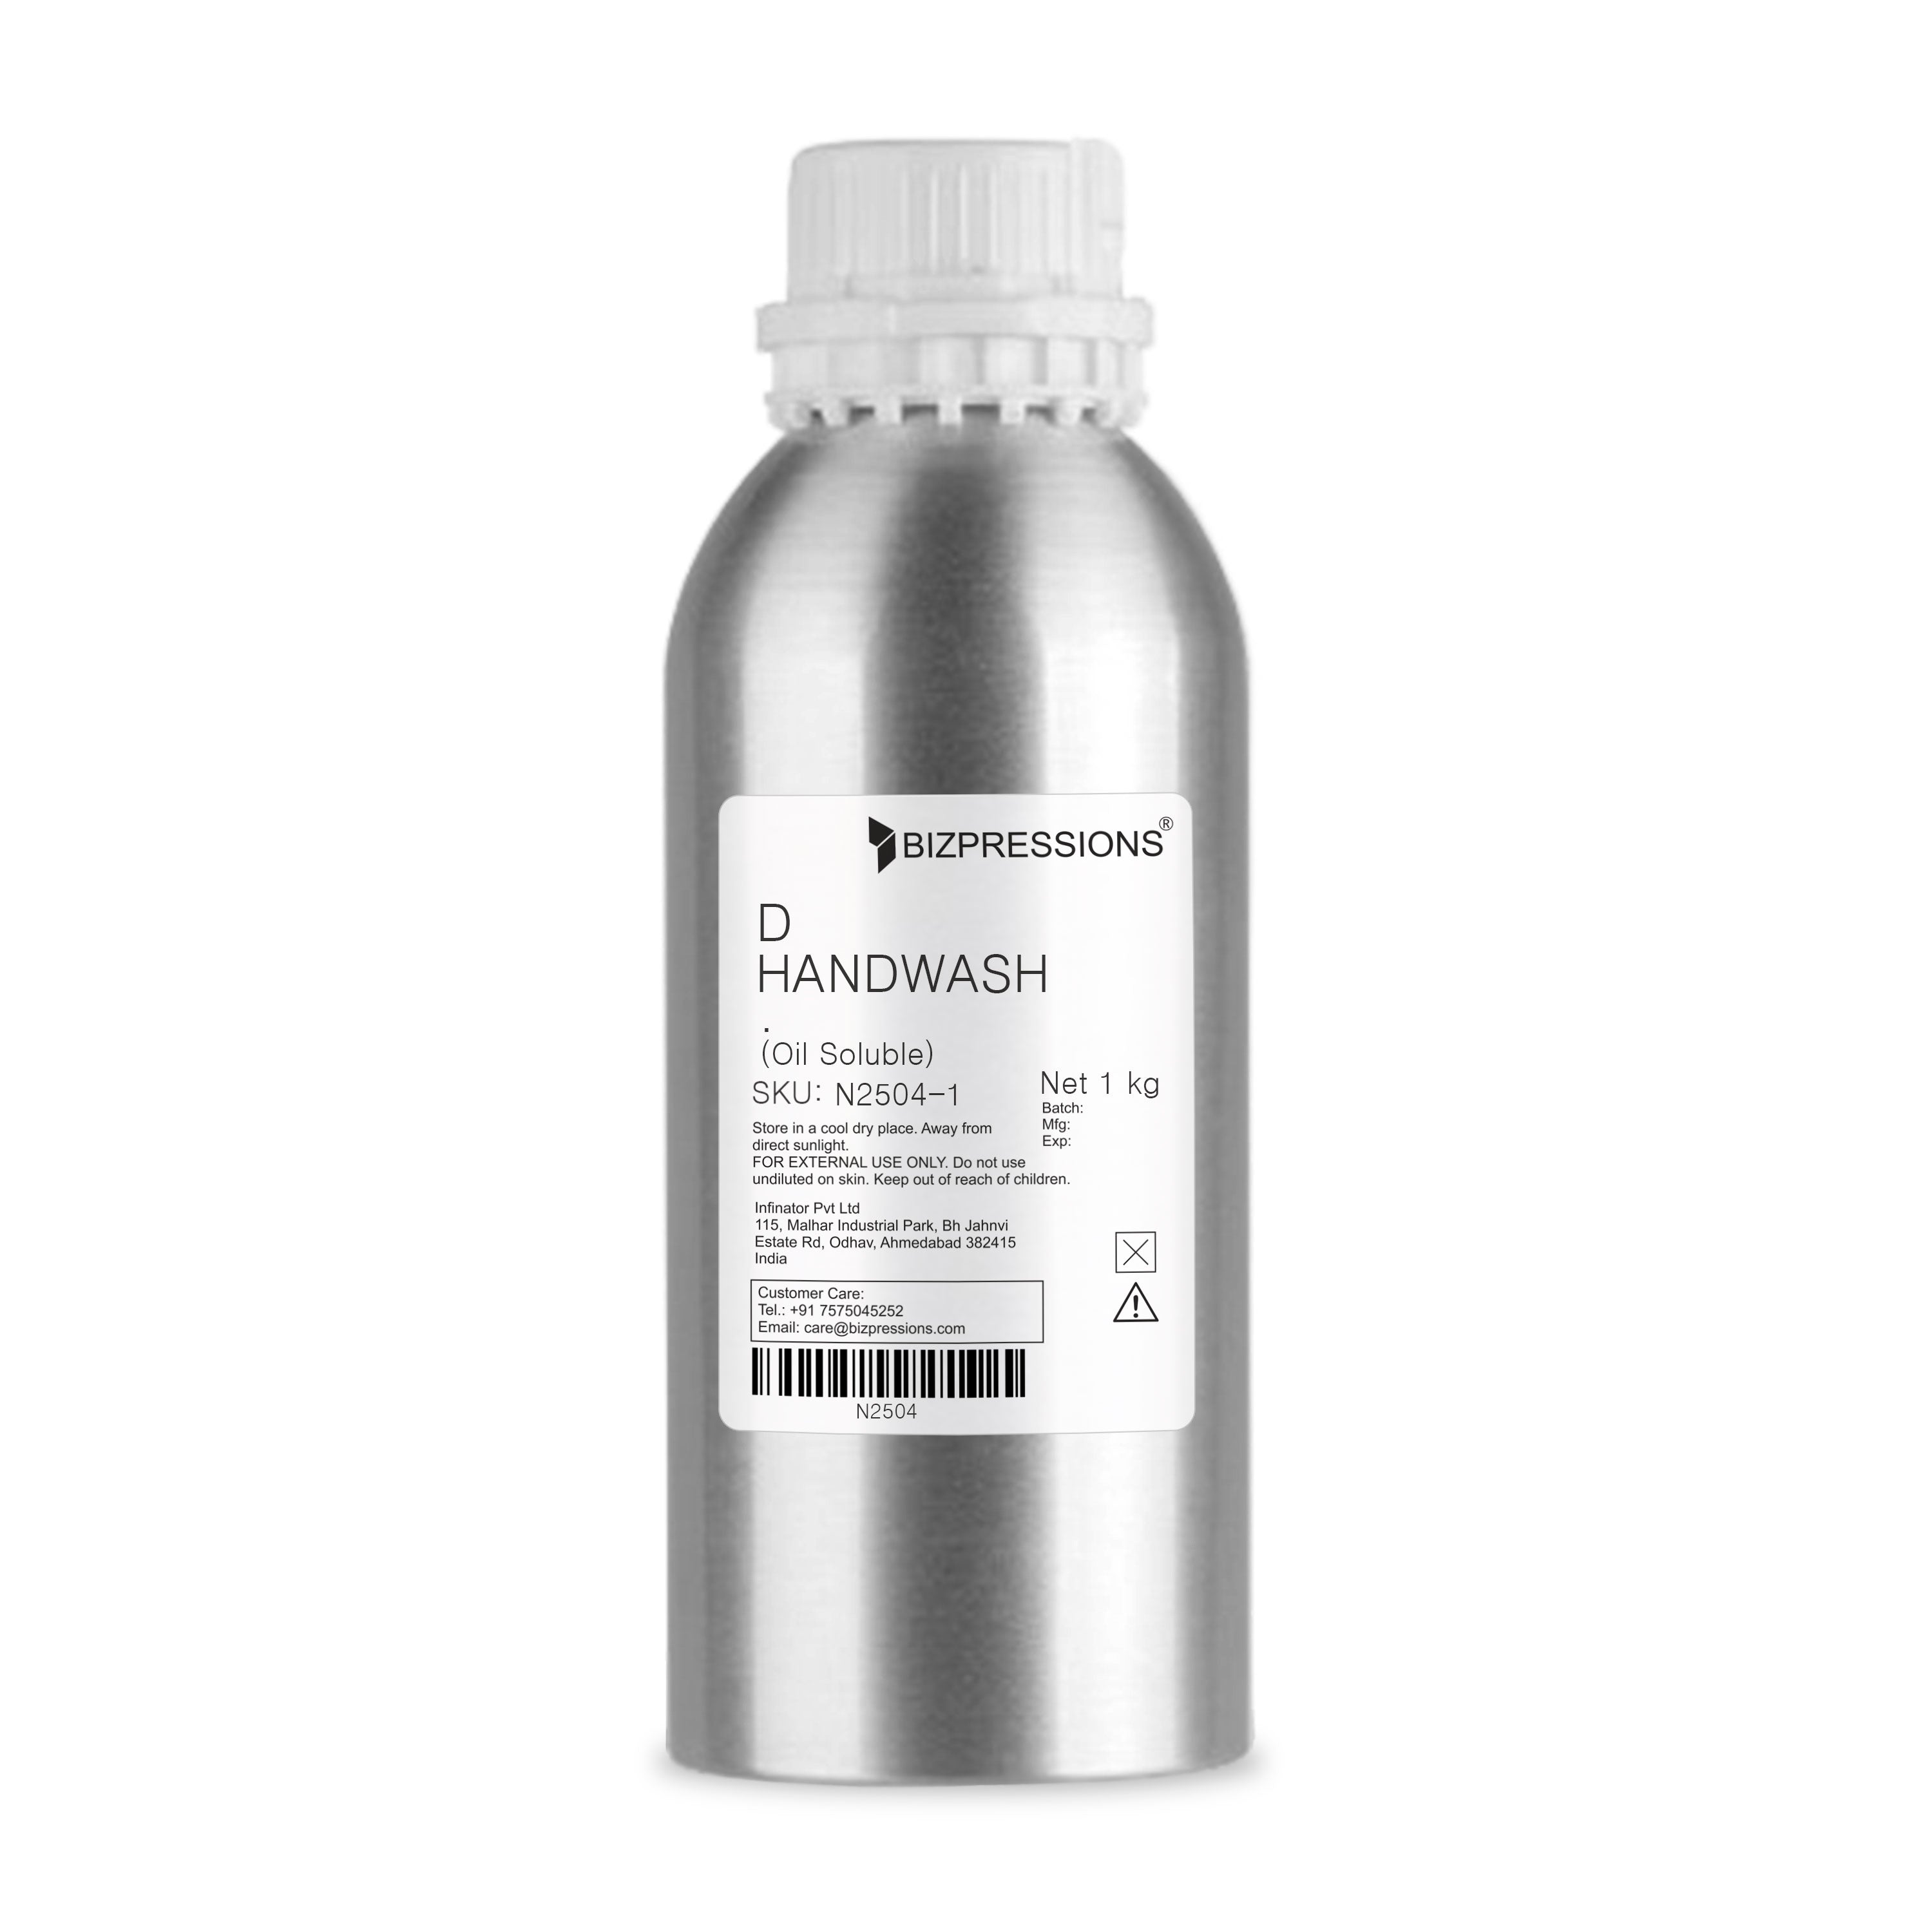 D HANDWASH- Fragrance (Oil Soluble)